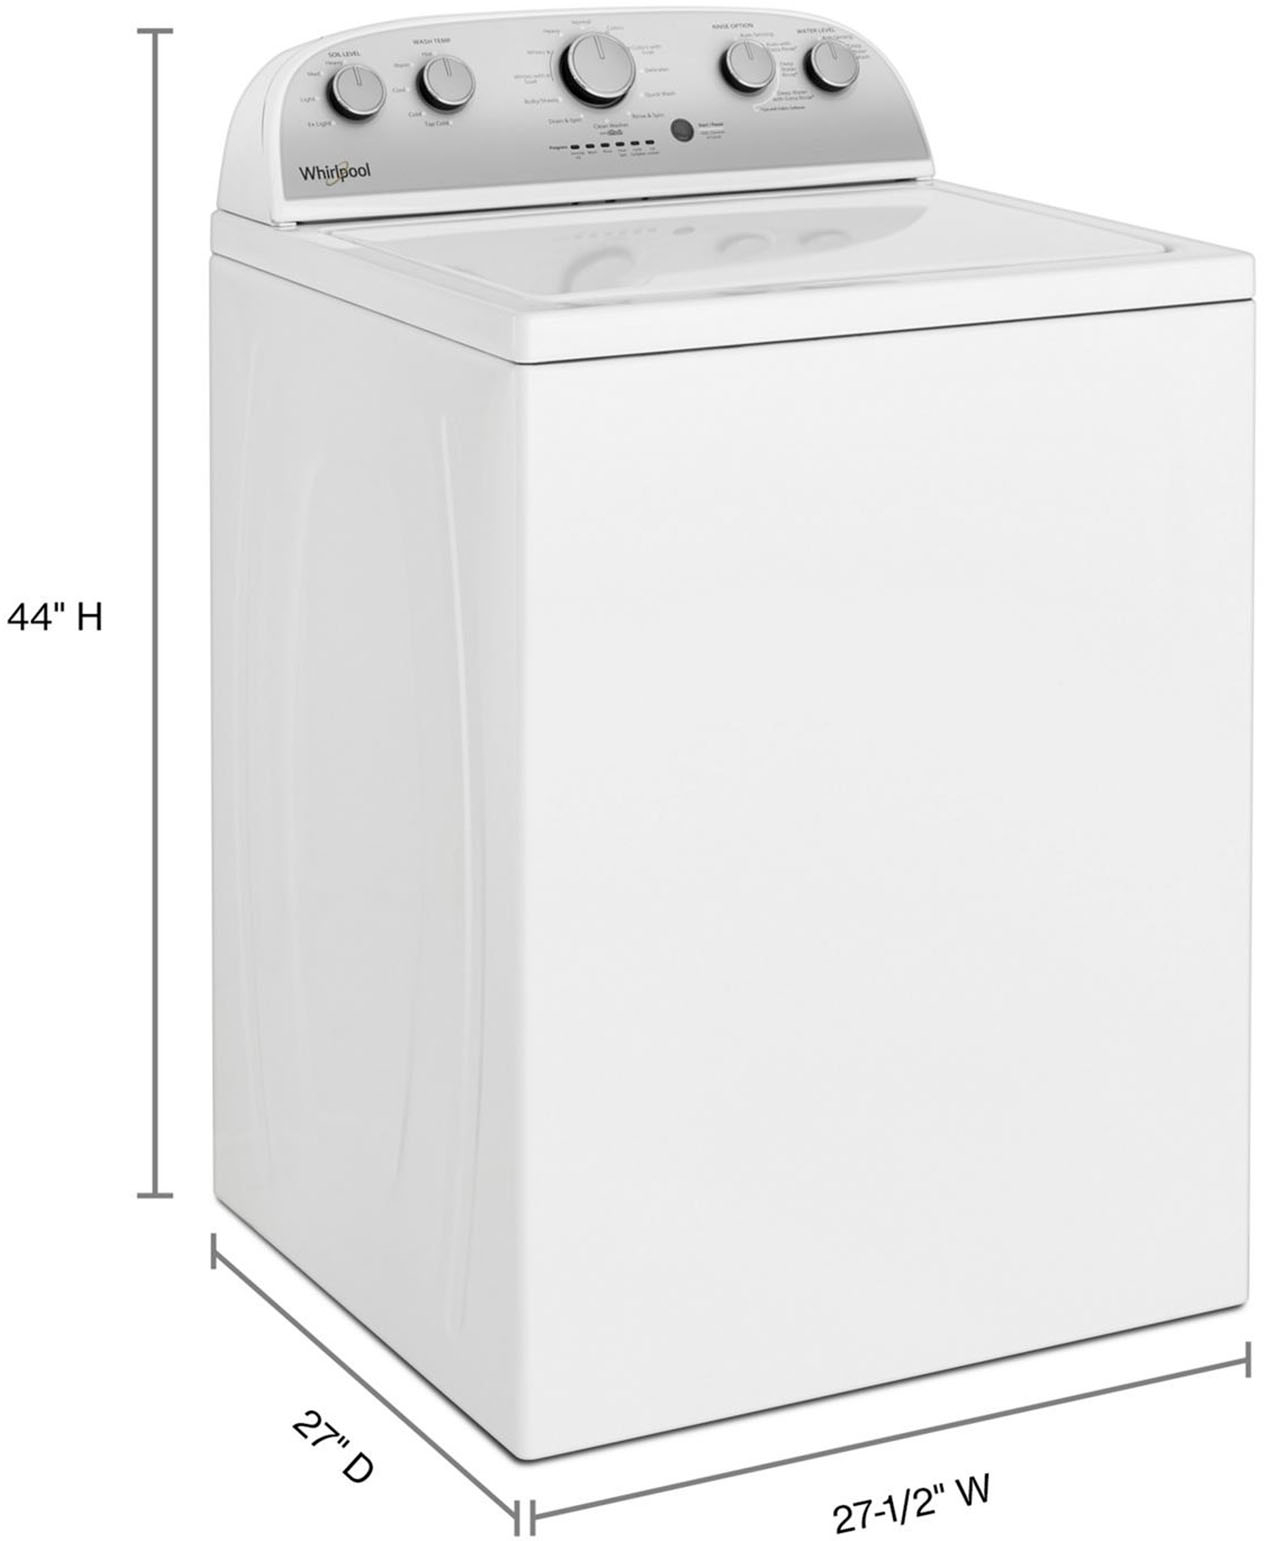 Whirlpool WTW5100HW Top-Loading Washing Machine 135.92 kg Courts